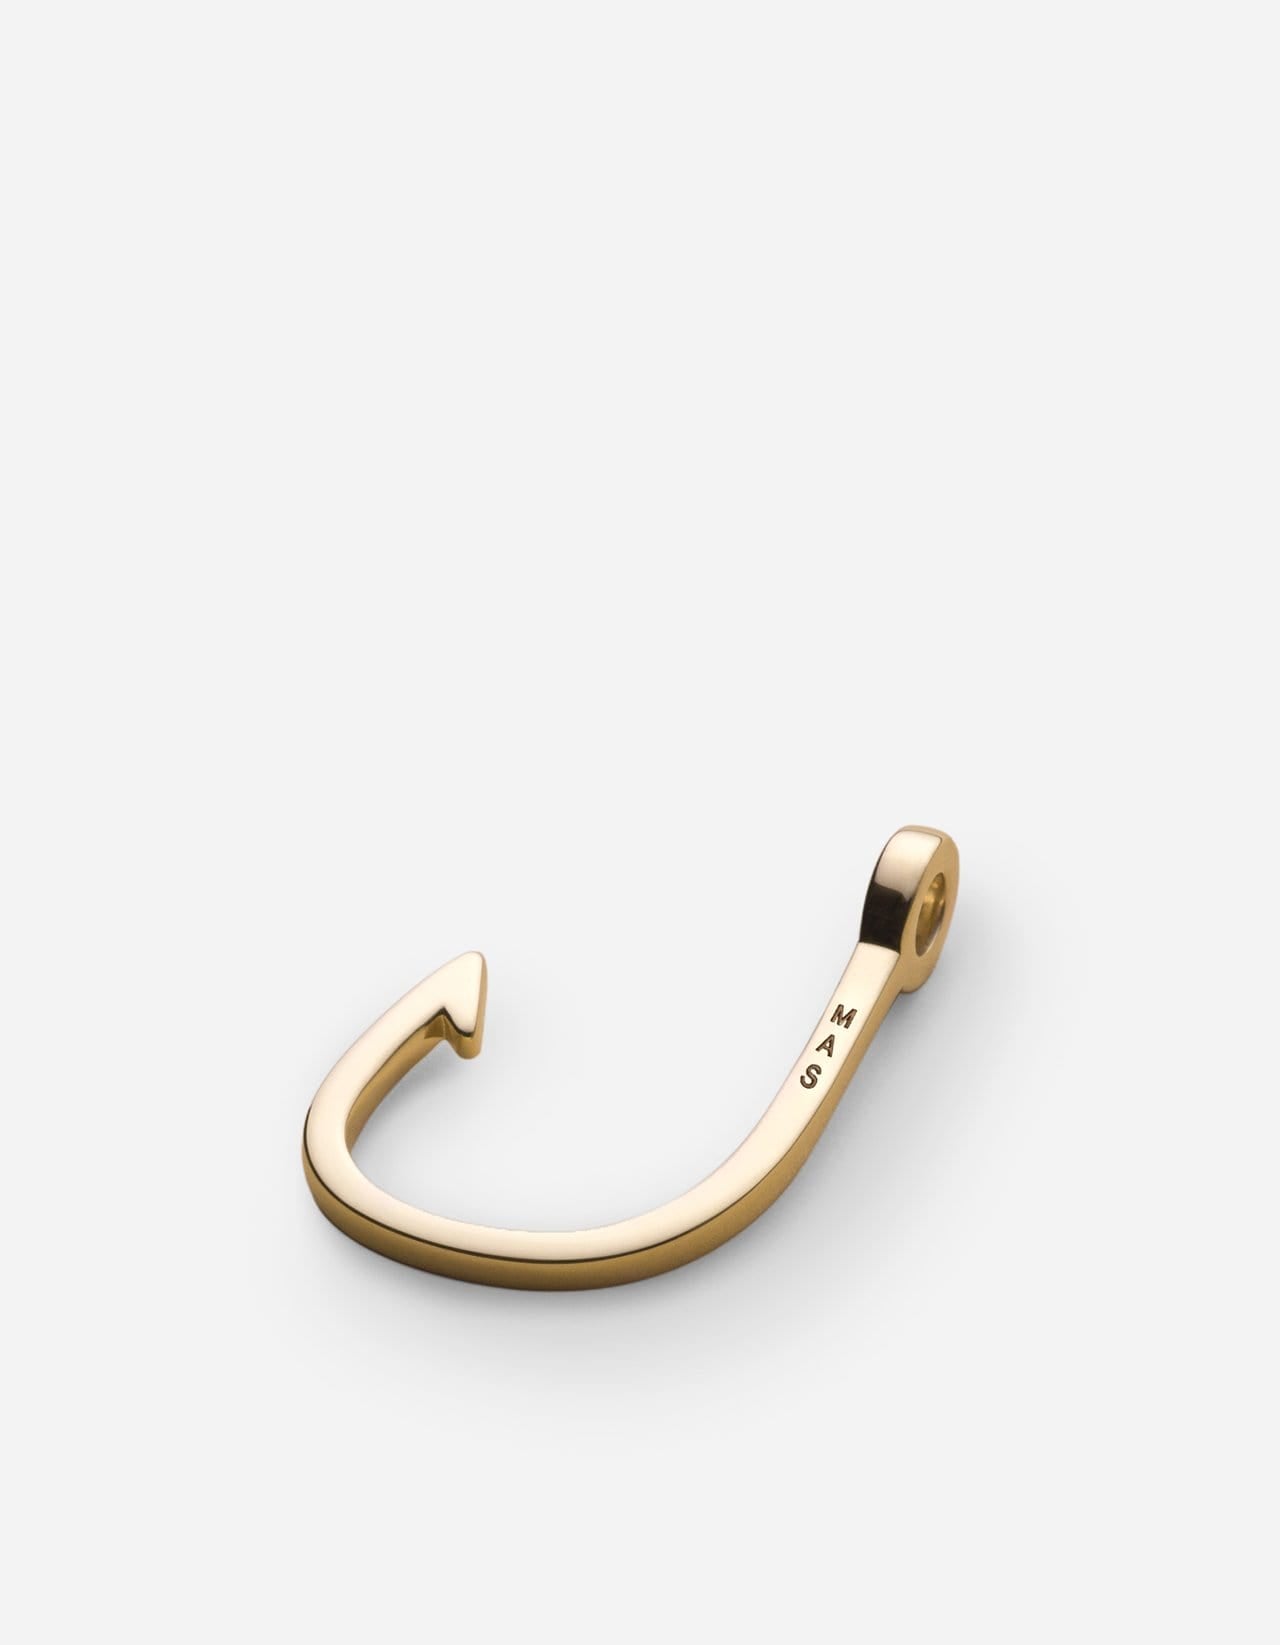 Hook on Leather Bracelet, Gold | Men\'s and Women\'s Bracelets | Miansai